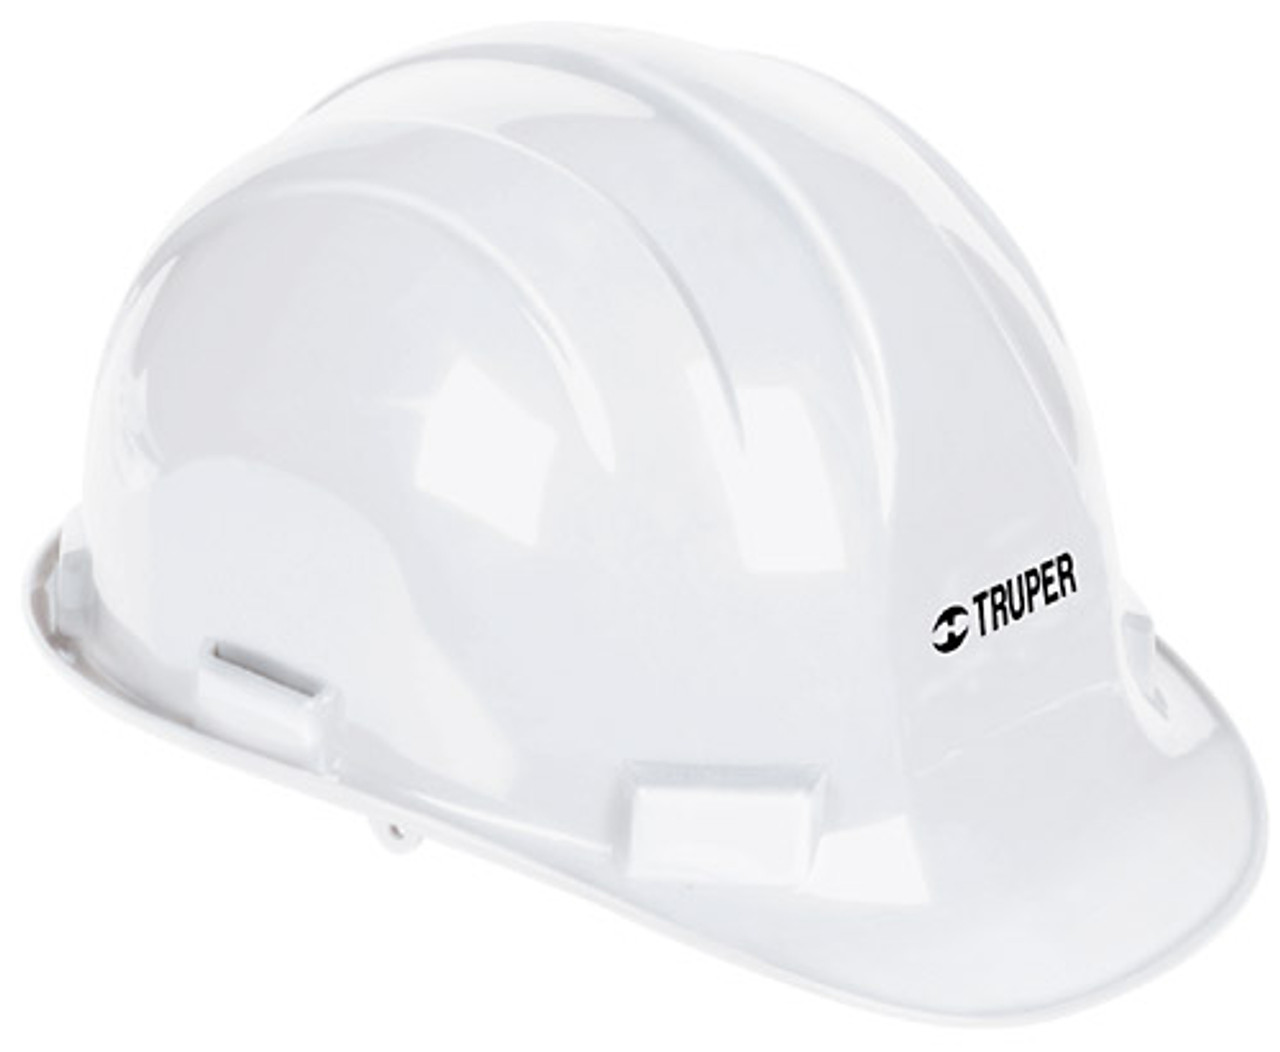 Truper Hard Hats, Ratchet Suspension, White Safety Helmet #10370